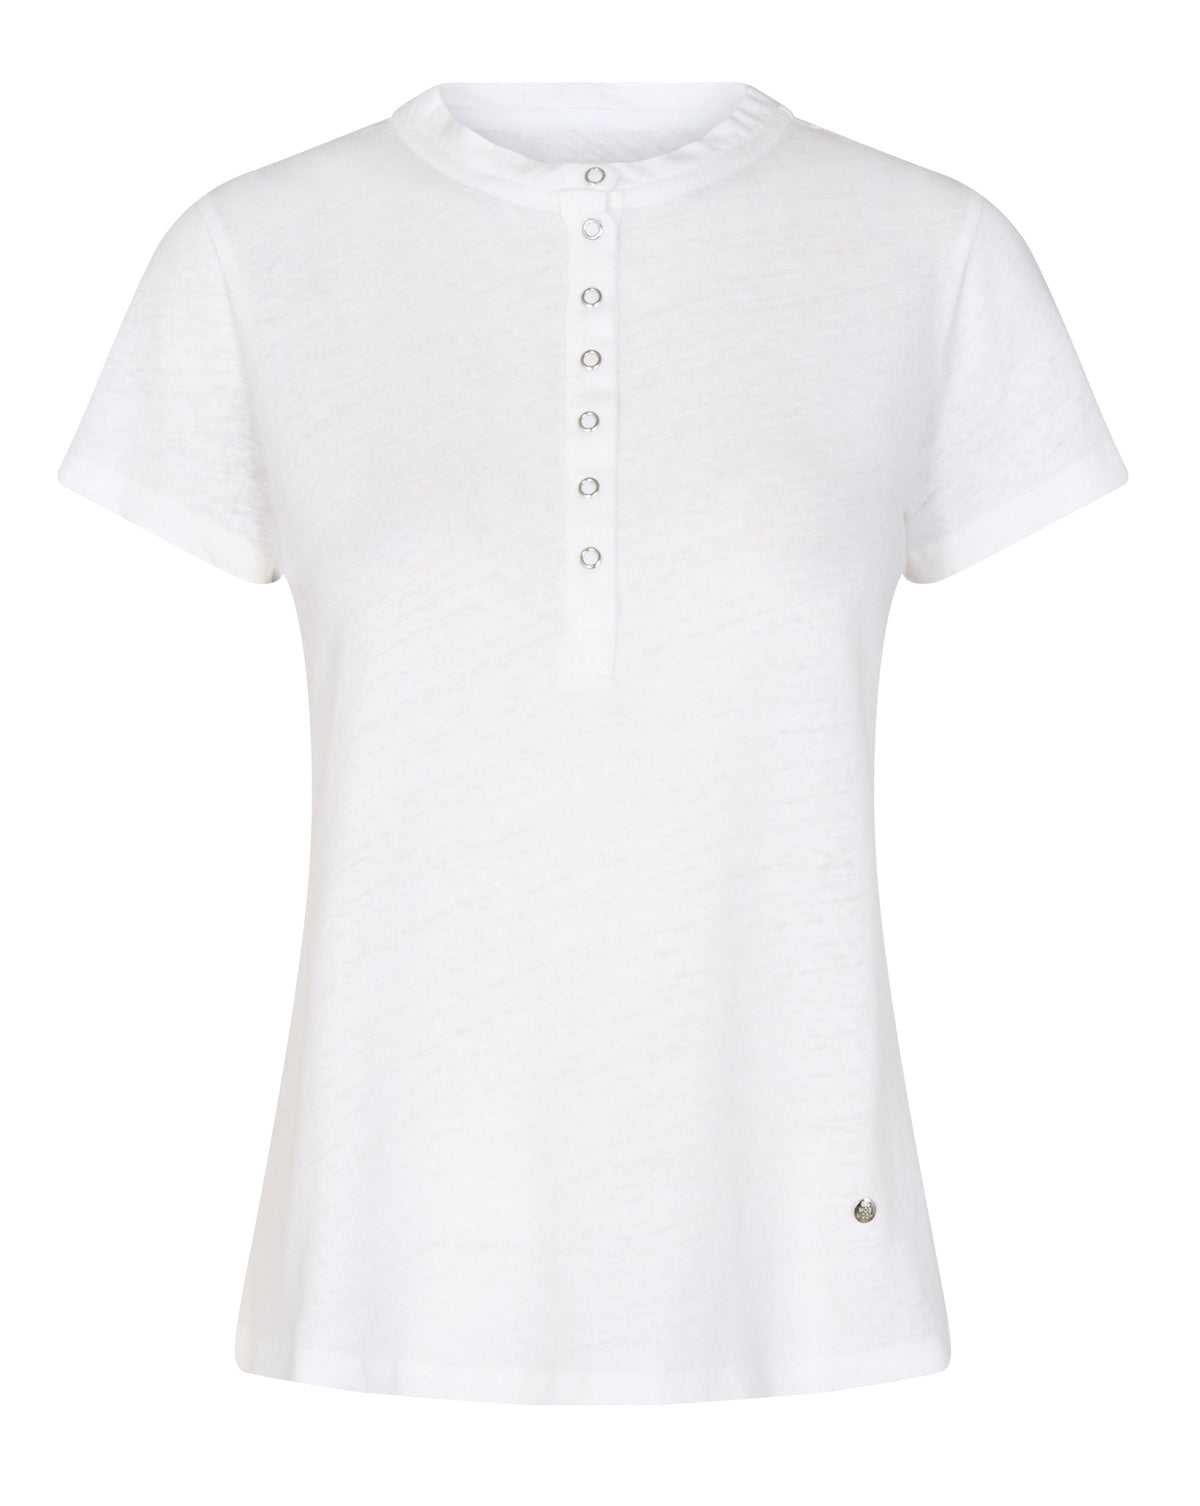 White short sleeves tshirt with half placket and metallic stud press stud fastenings